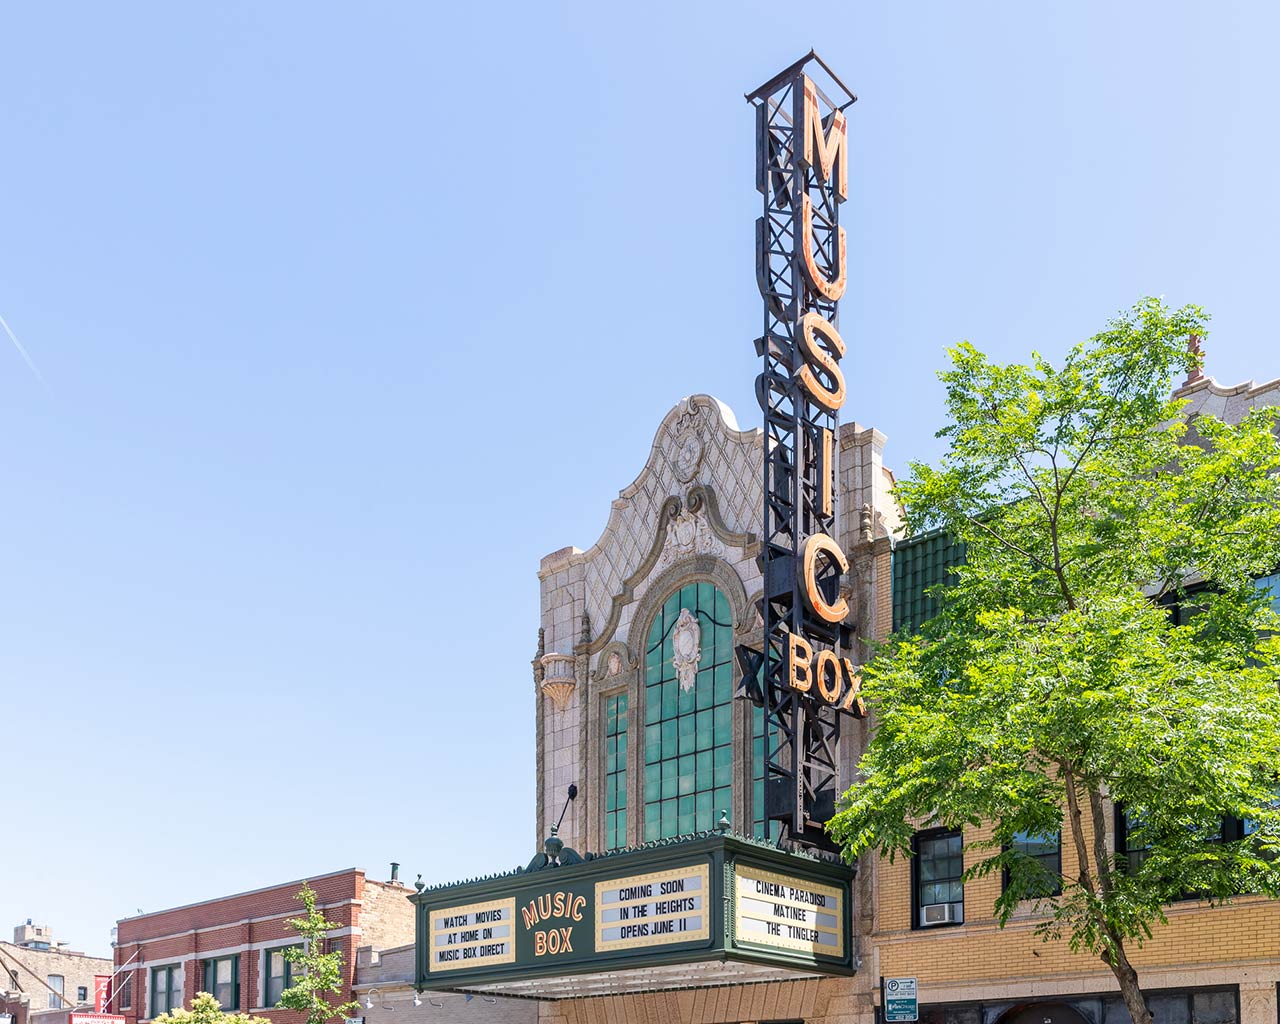 Photo of Chicago, IL, USA - June 6, 2021: Music Box Theater